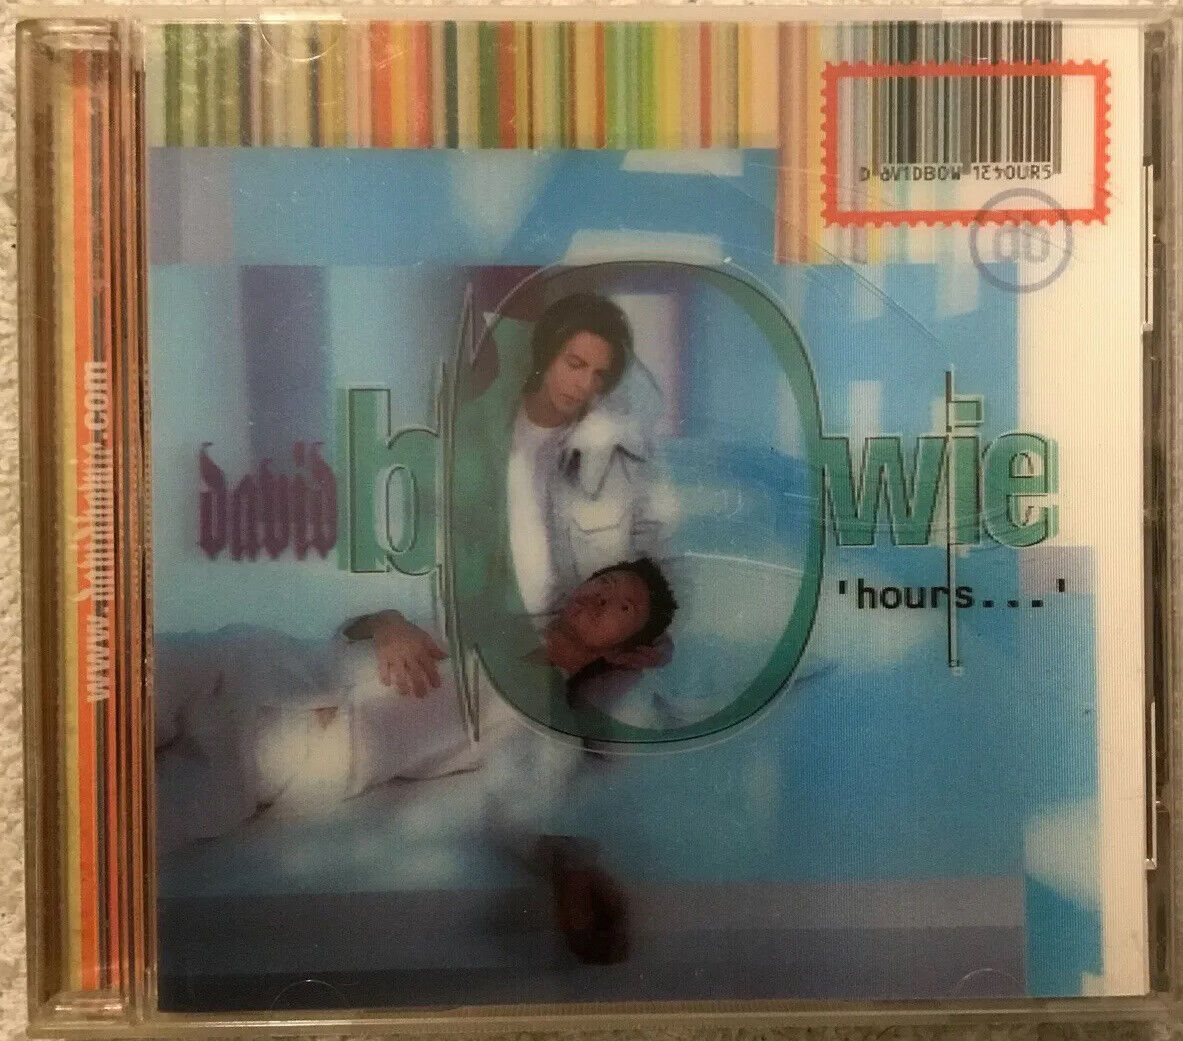 David Bowie : Hours (CD) Virgin 1999 Full Album